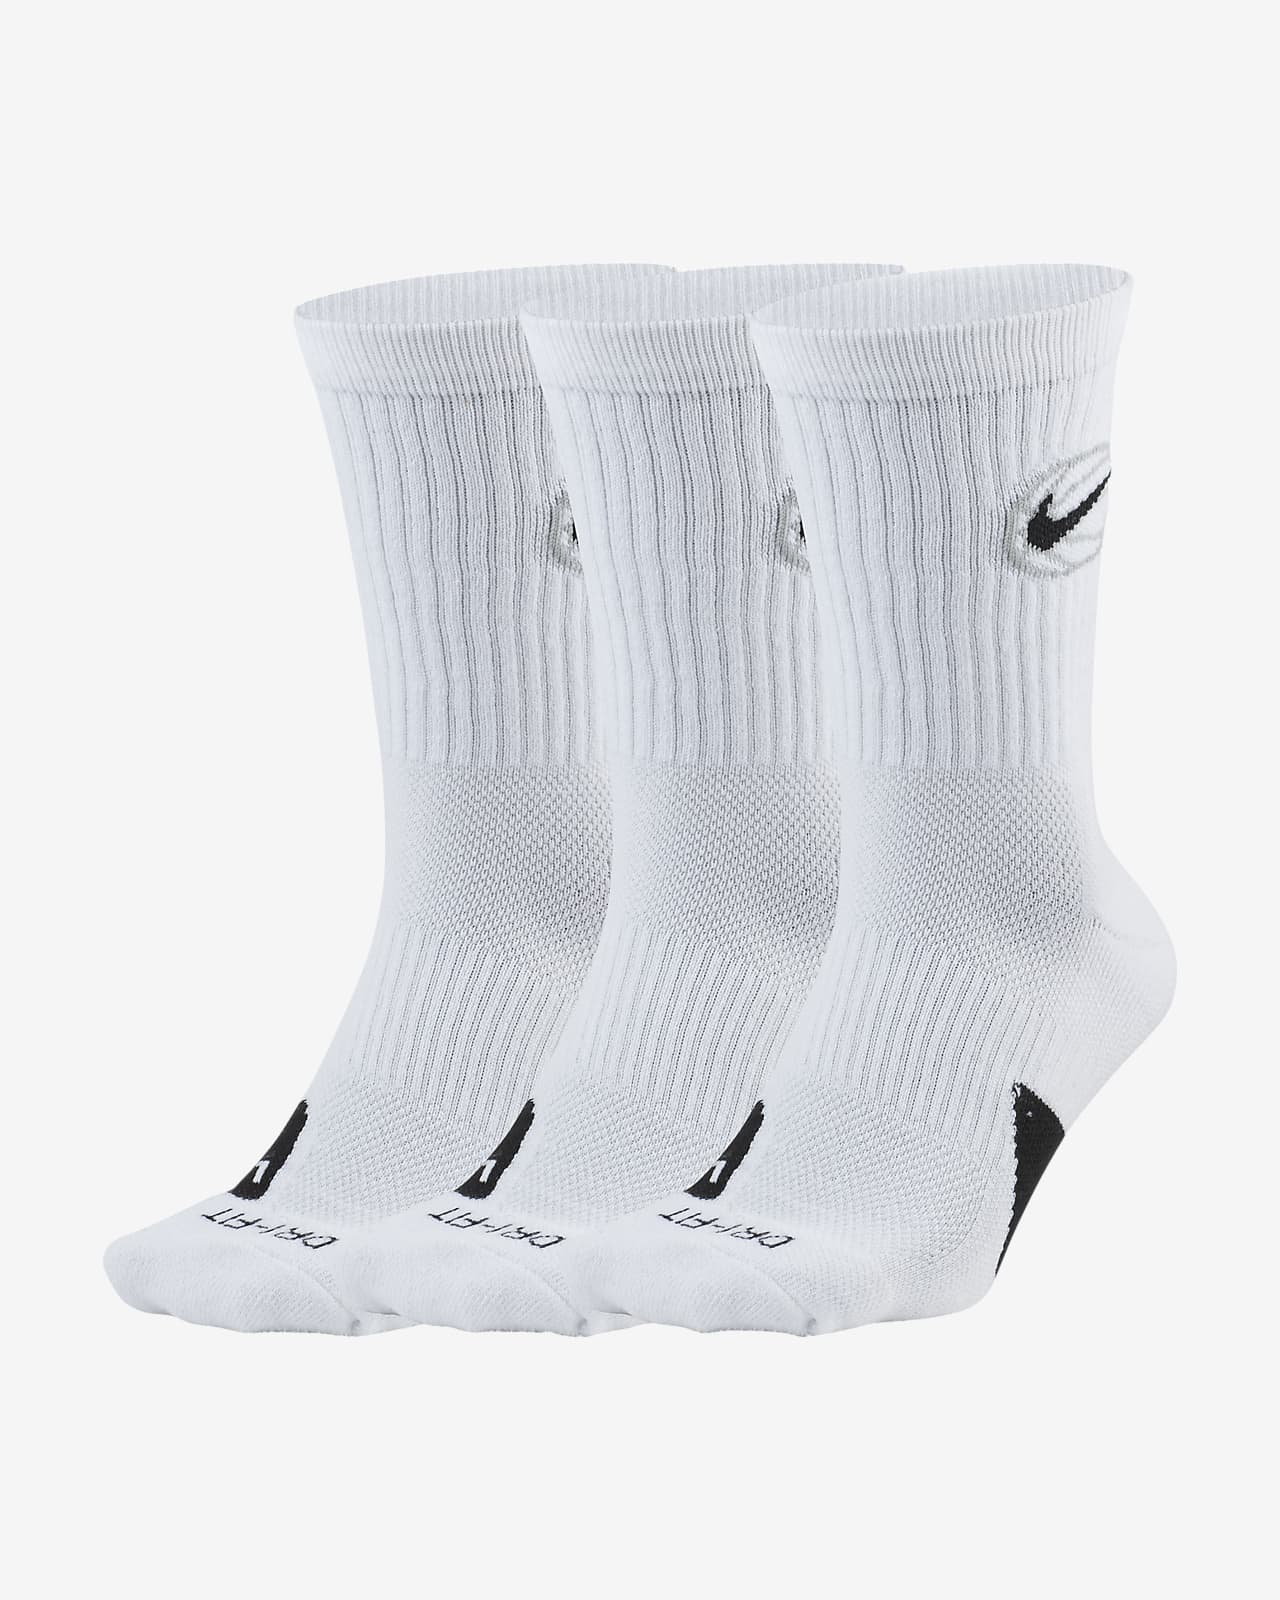 Nike Everyday Crew Basketball Socks (3 Pairs)